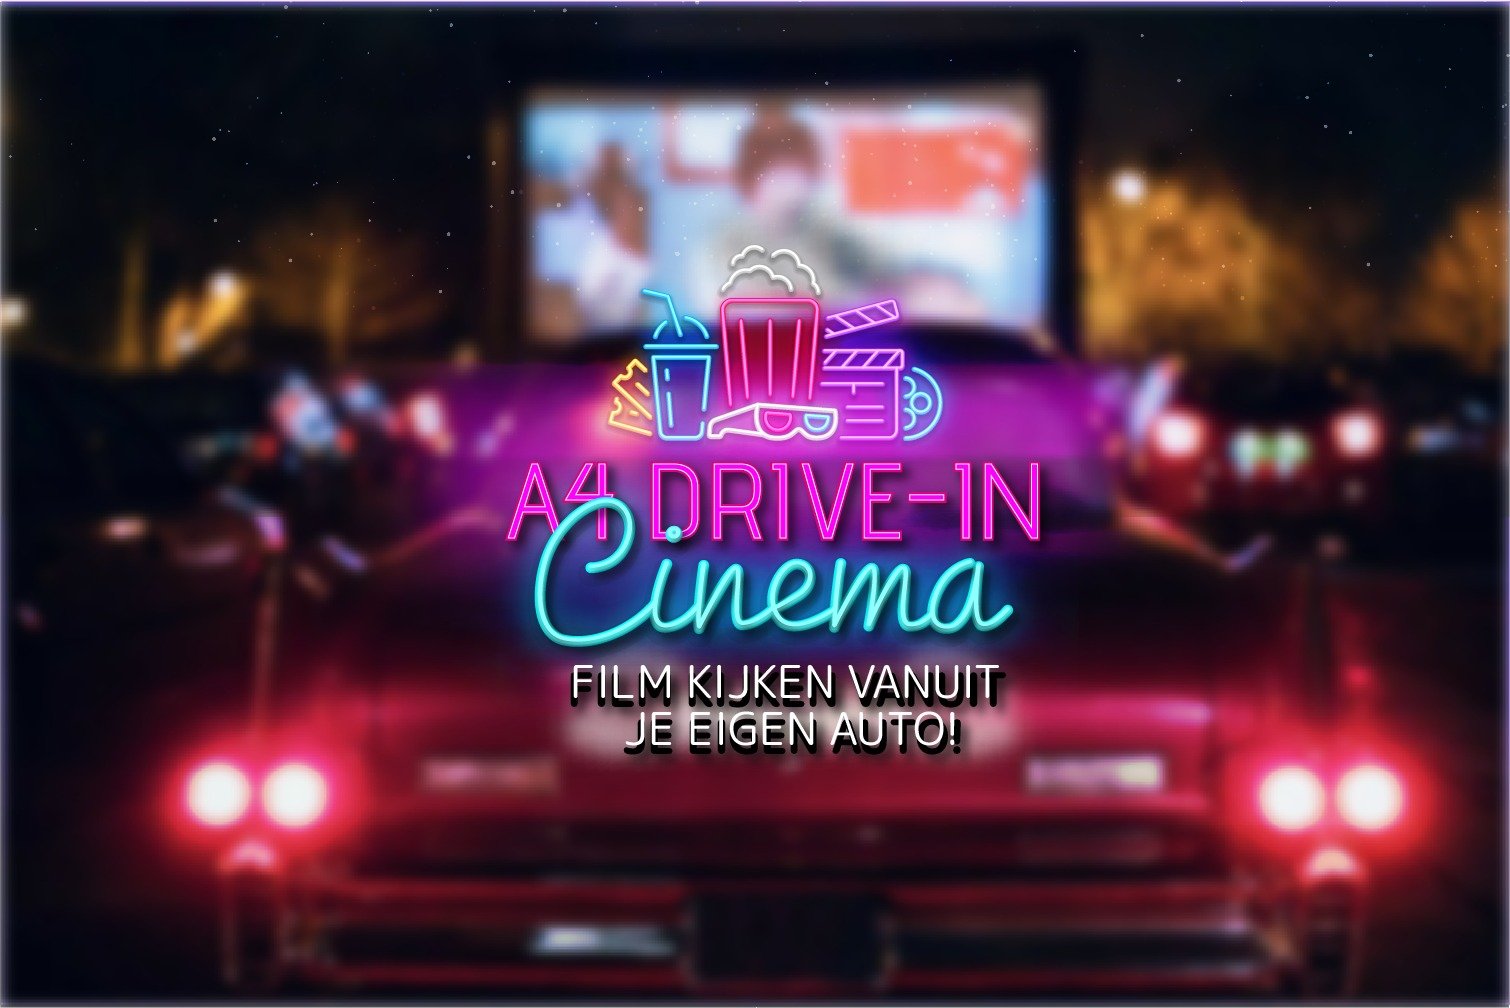 Drive-in bioscoop: Indecent proposal